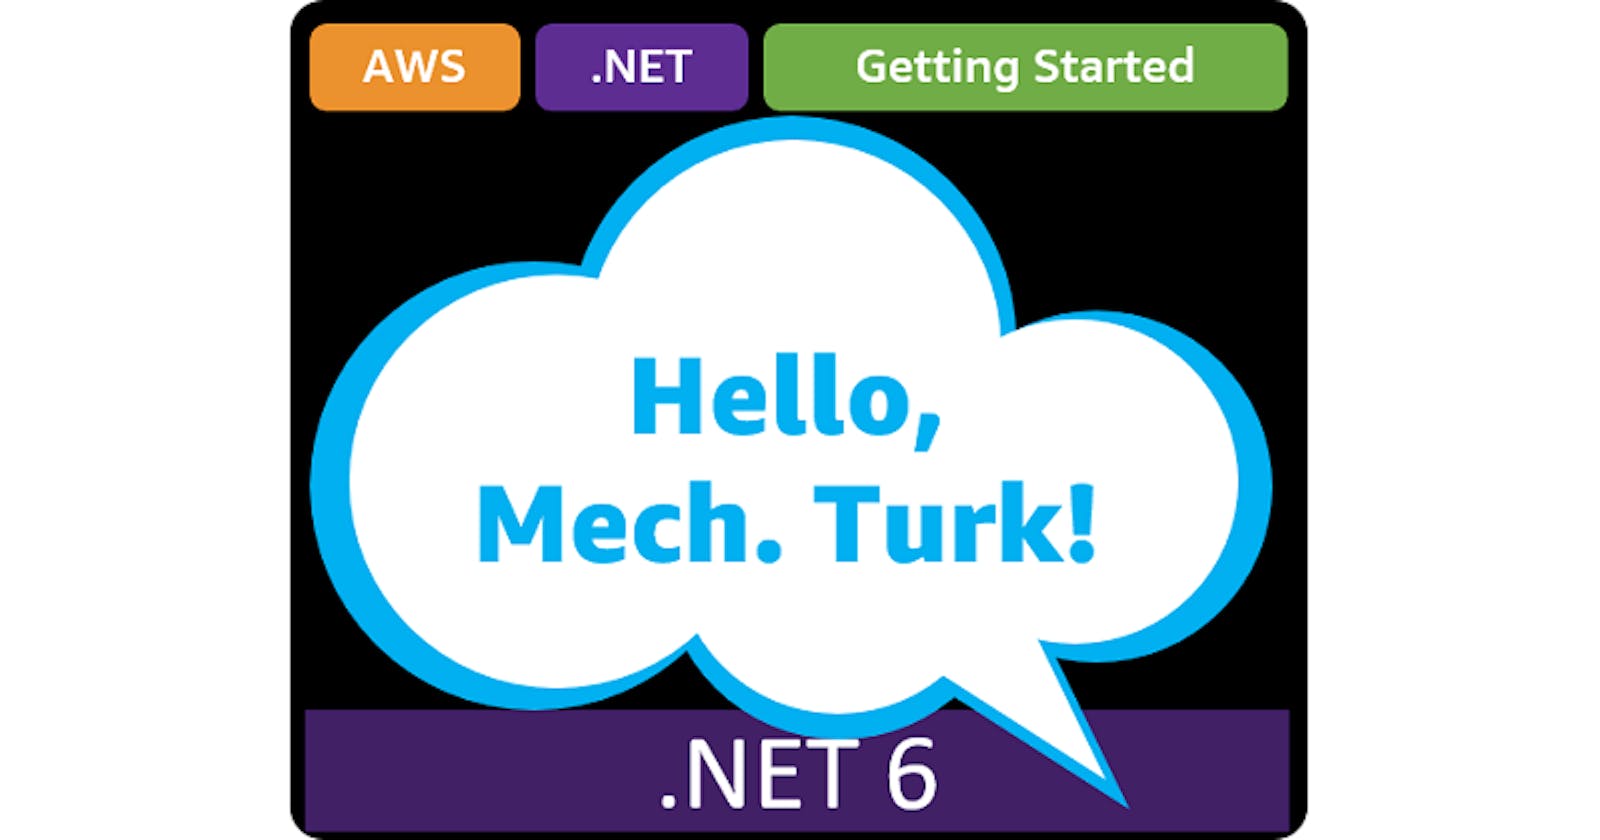 Hello, Mechanical Turk!